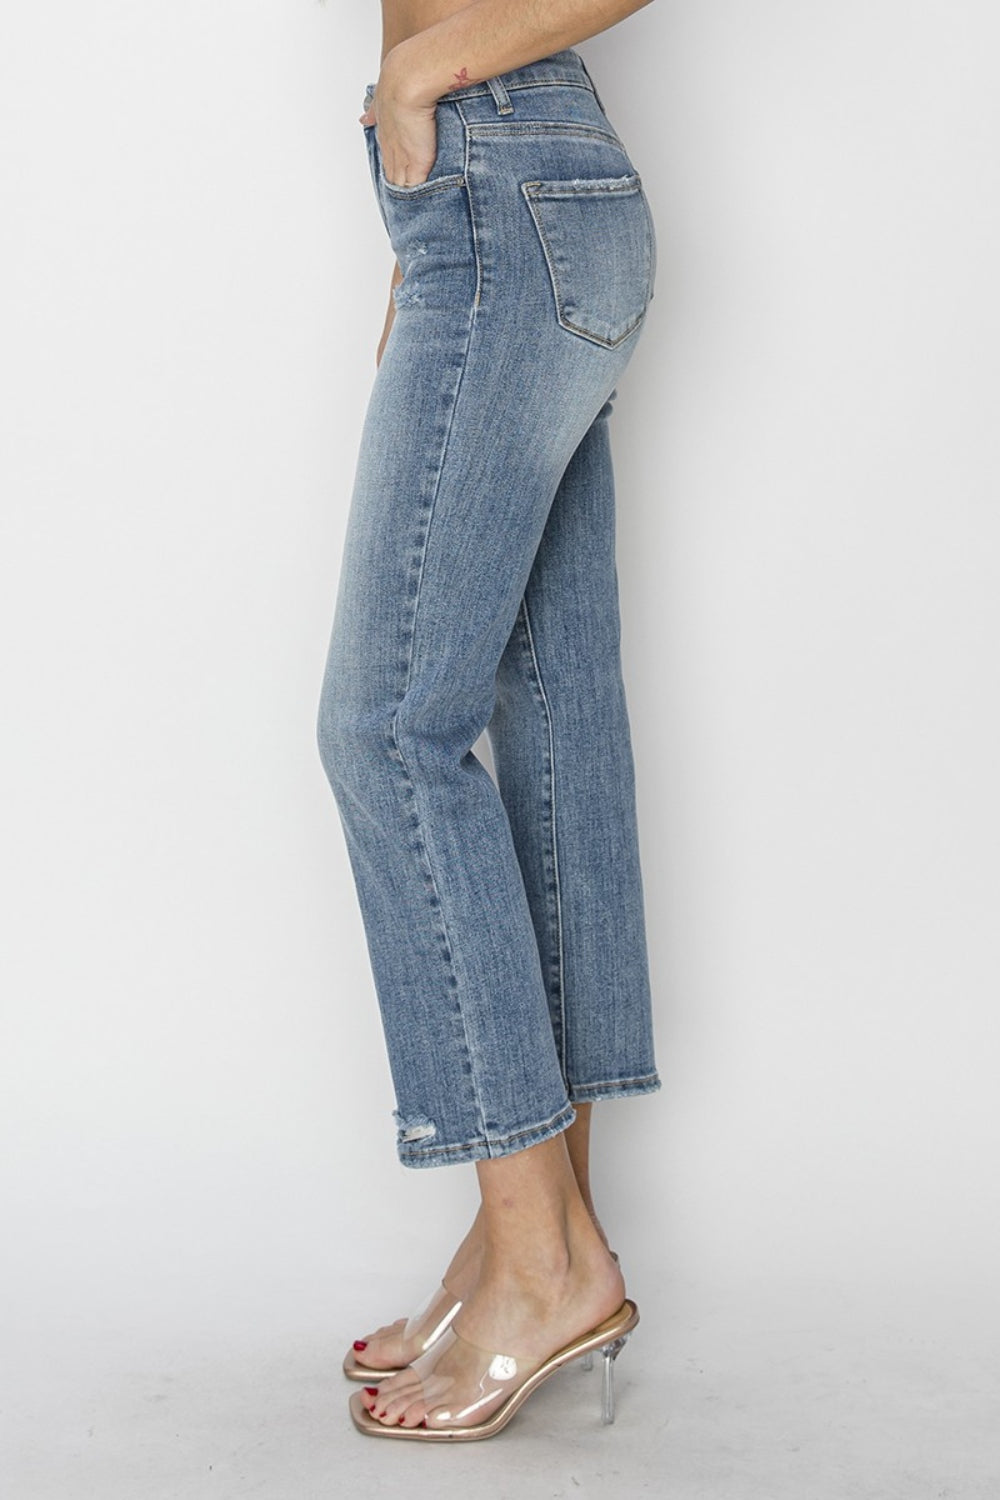 RISEN Full Run High Waist Distressed Cropped Jeans - Tigbuls Variety Fashion